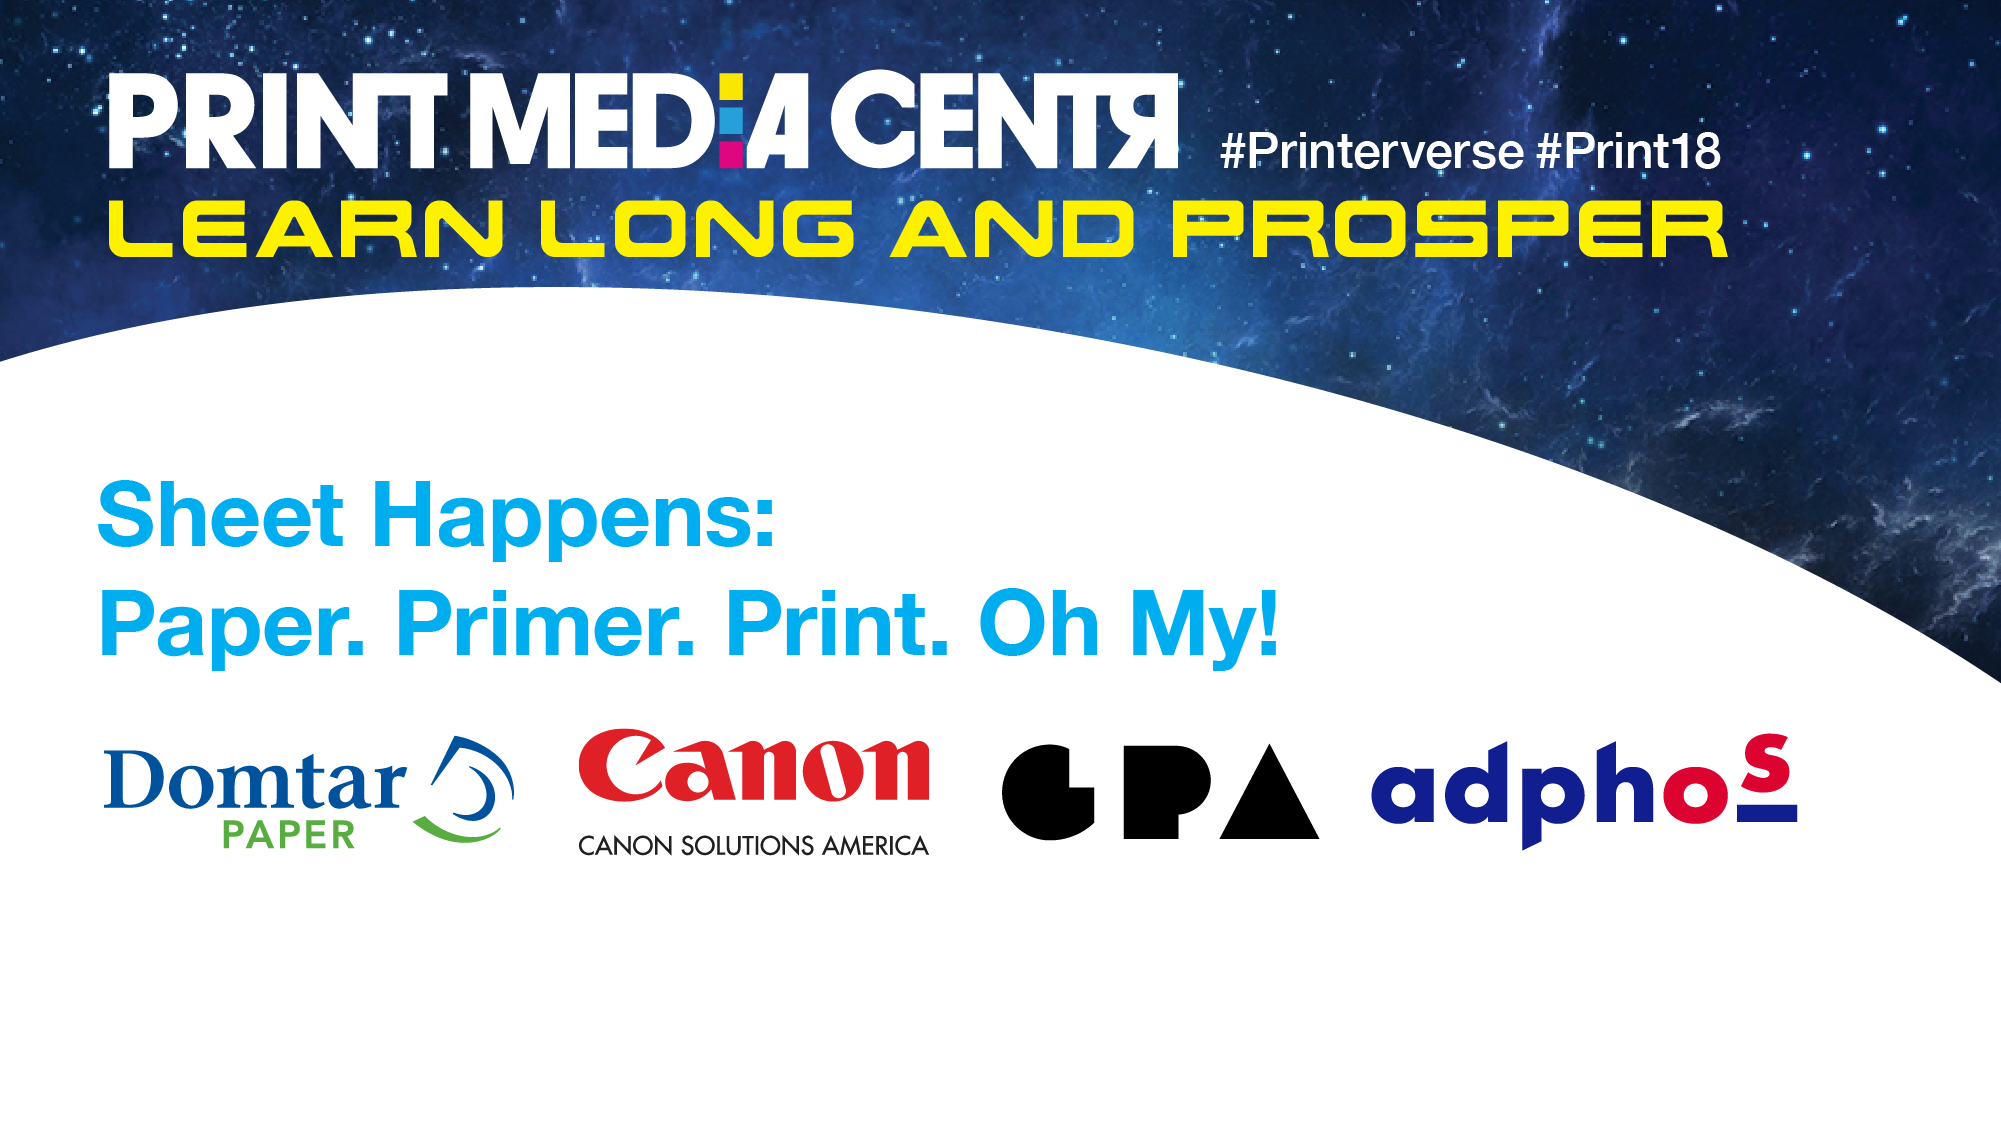 Sheet Happens Print Media Centr